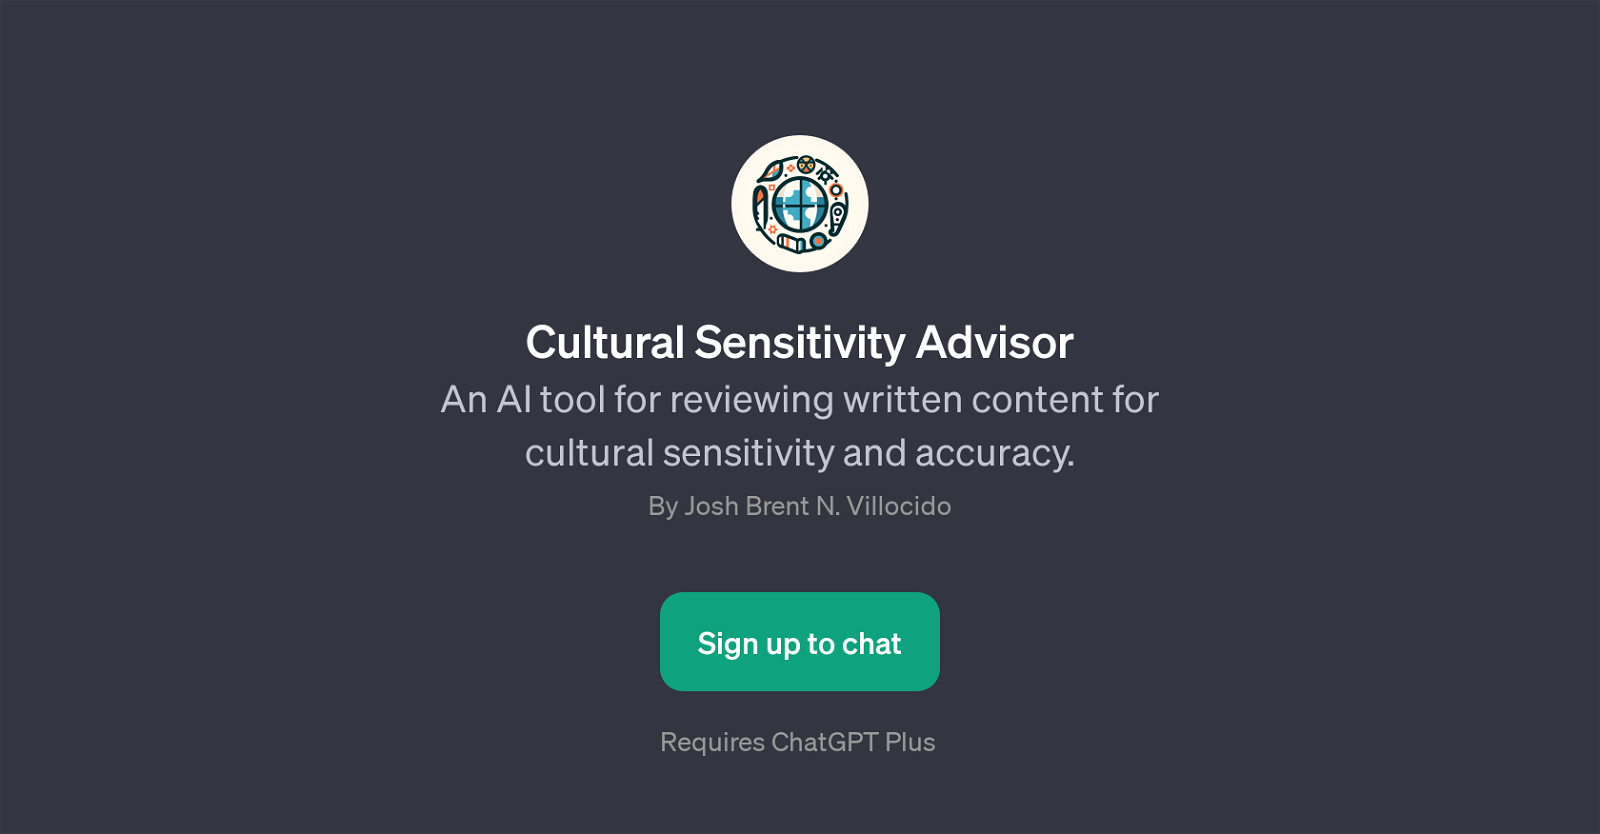 Cultural Sensitivity Advisor website